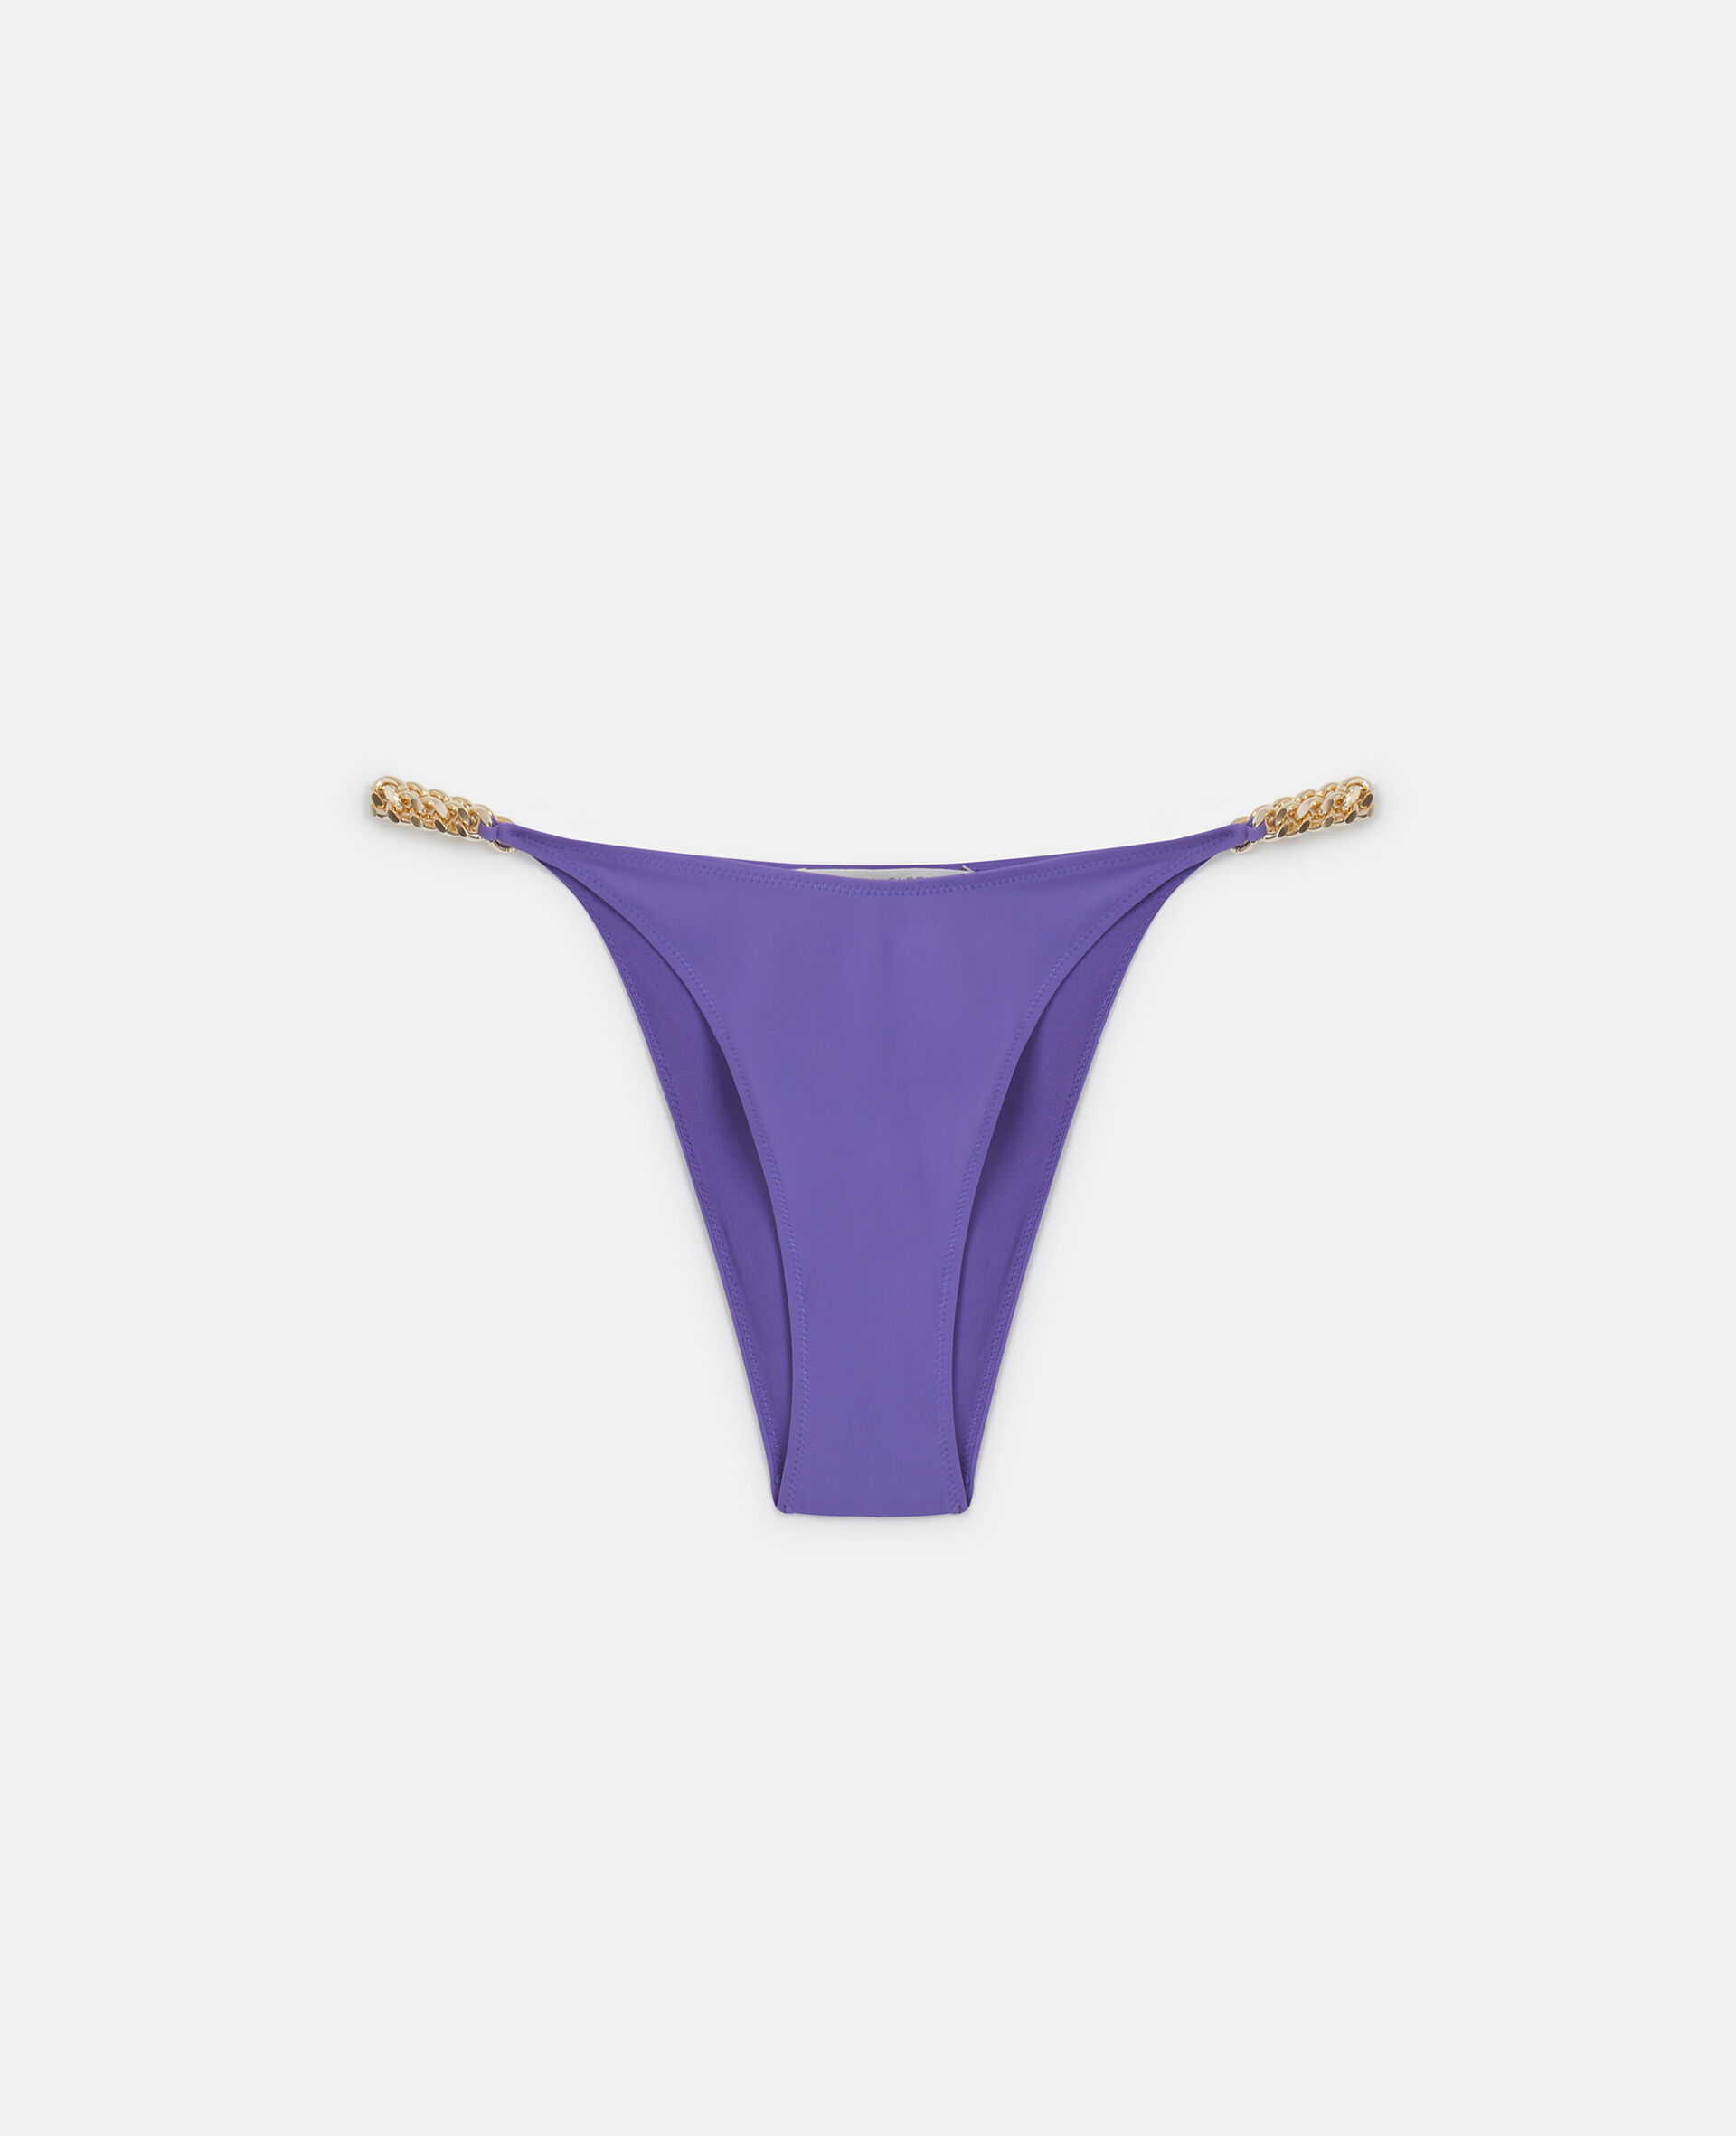 Bas de bikini echancre Falabella-Purple-large image number 0